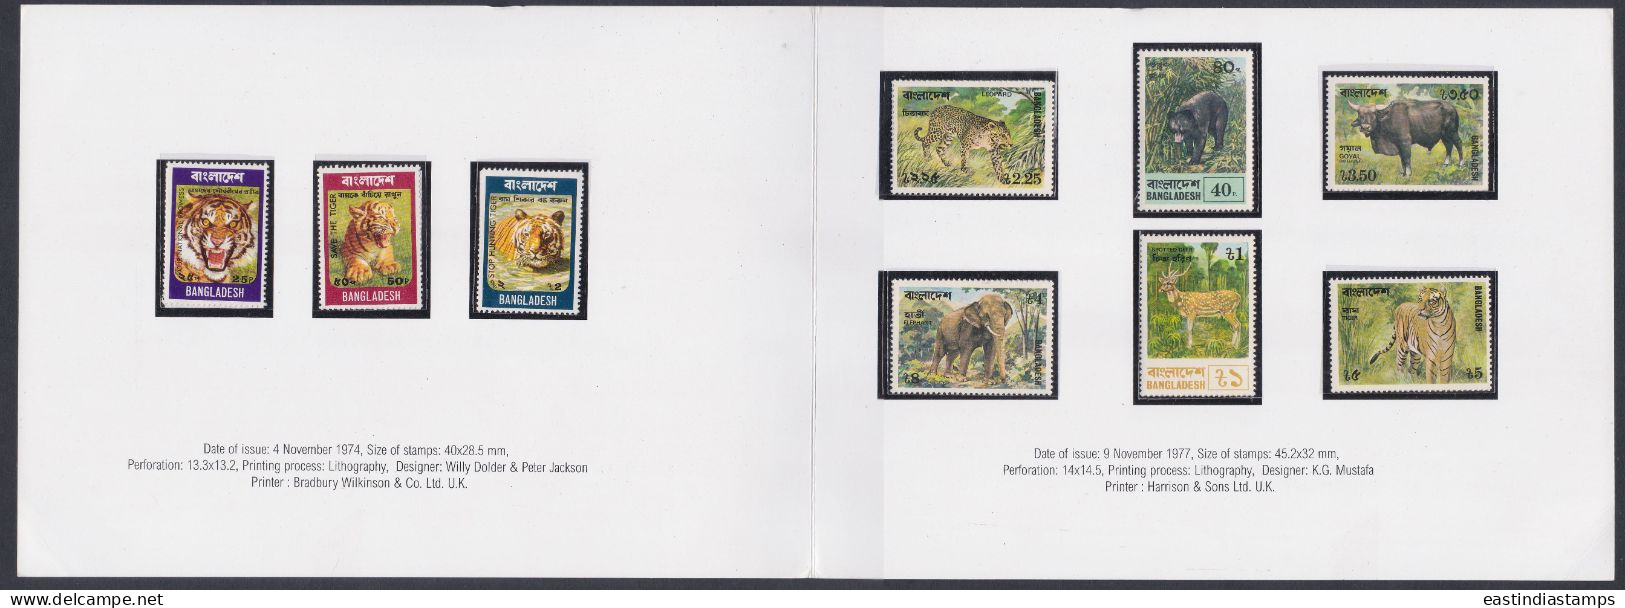 Bangladesh 1974 1977 MNH Stamps, Tiger, Tigers, Wild Life, Wild Life, Animal, Animals, Deer, Elephant, Leopar, Bear - Bangladesh